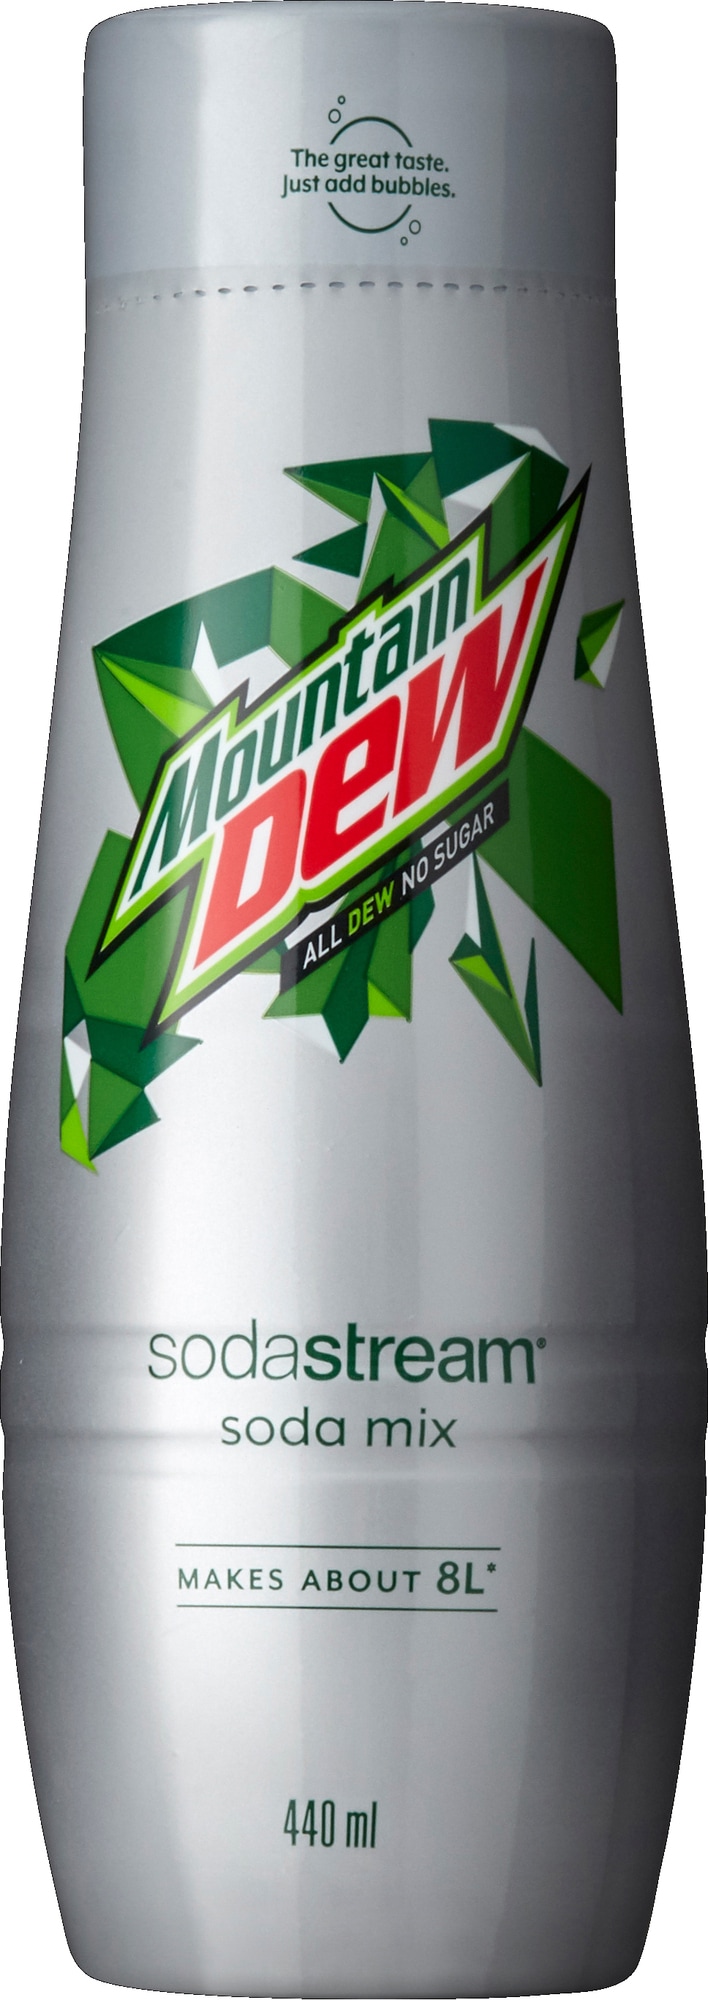 Sodastream Mountain Dew Diet-smag 1100012770